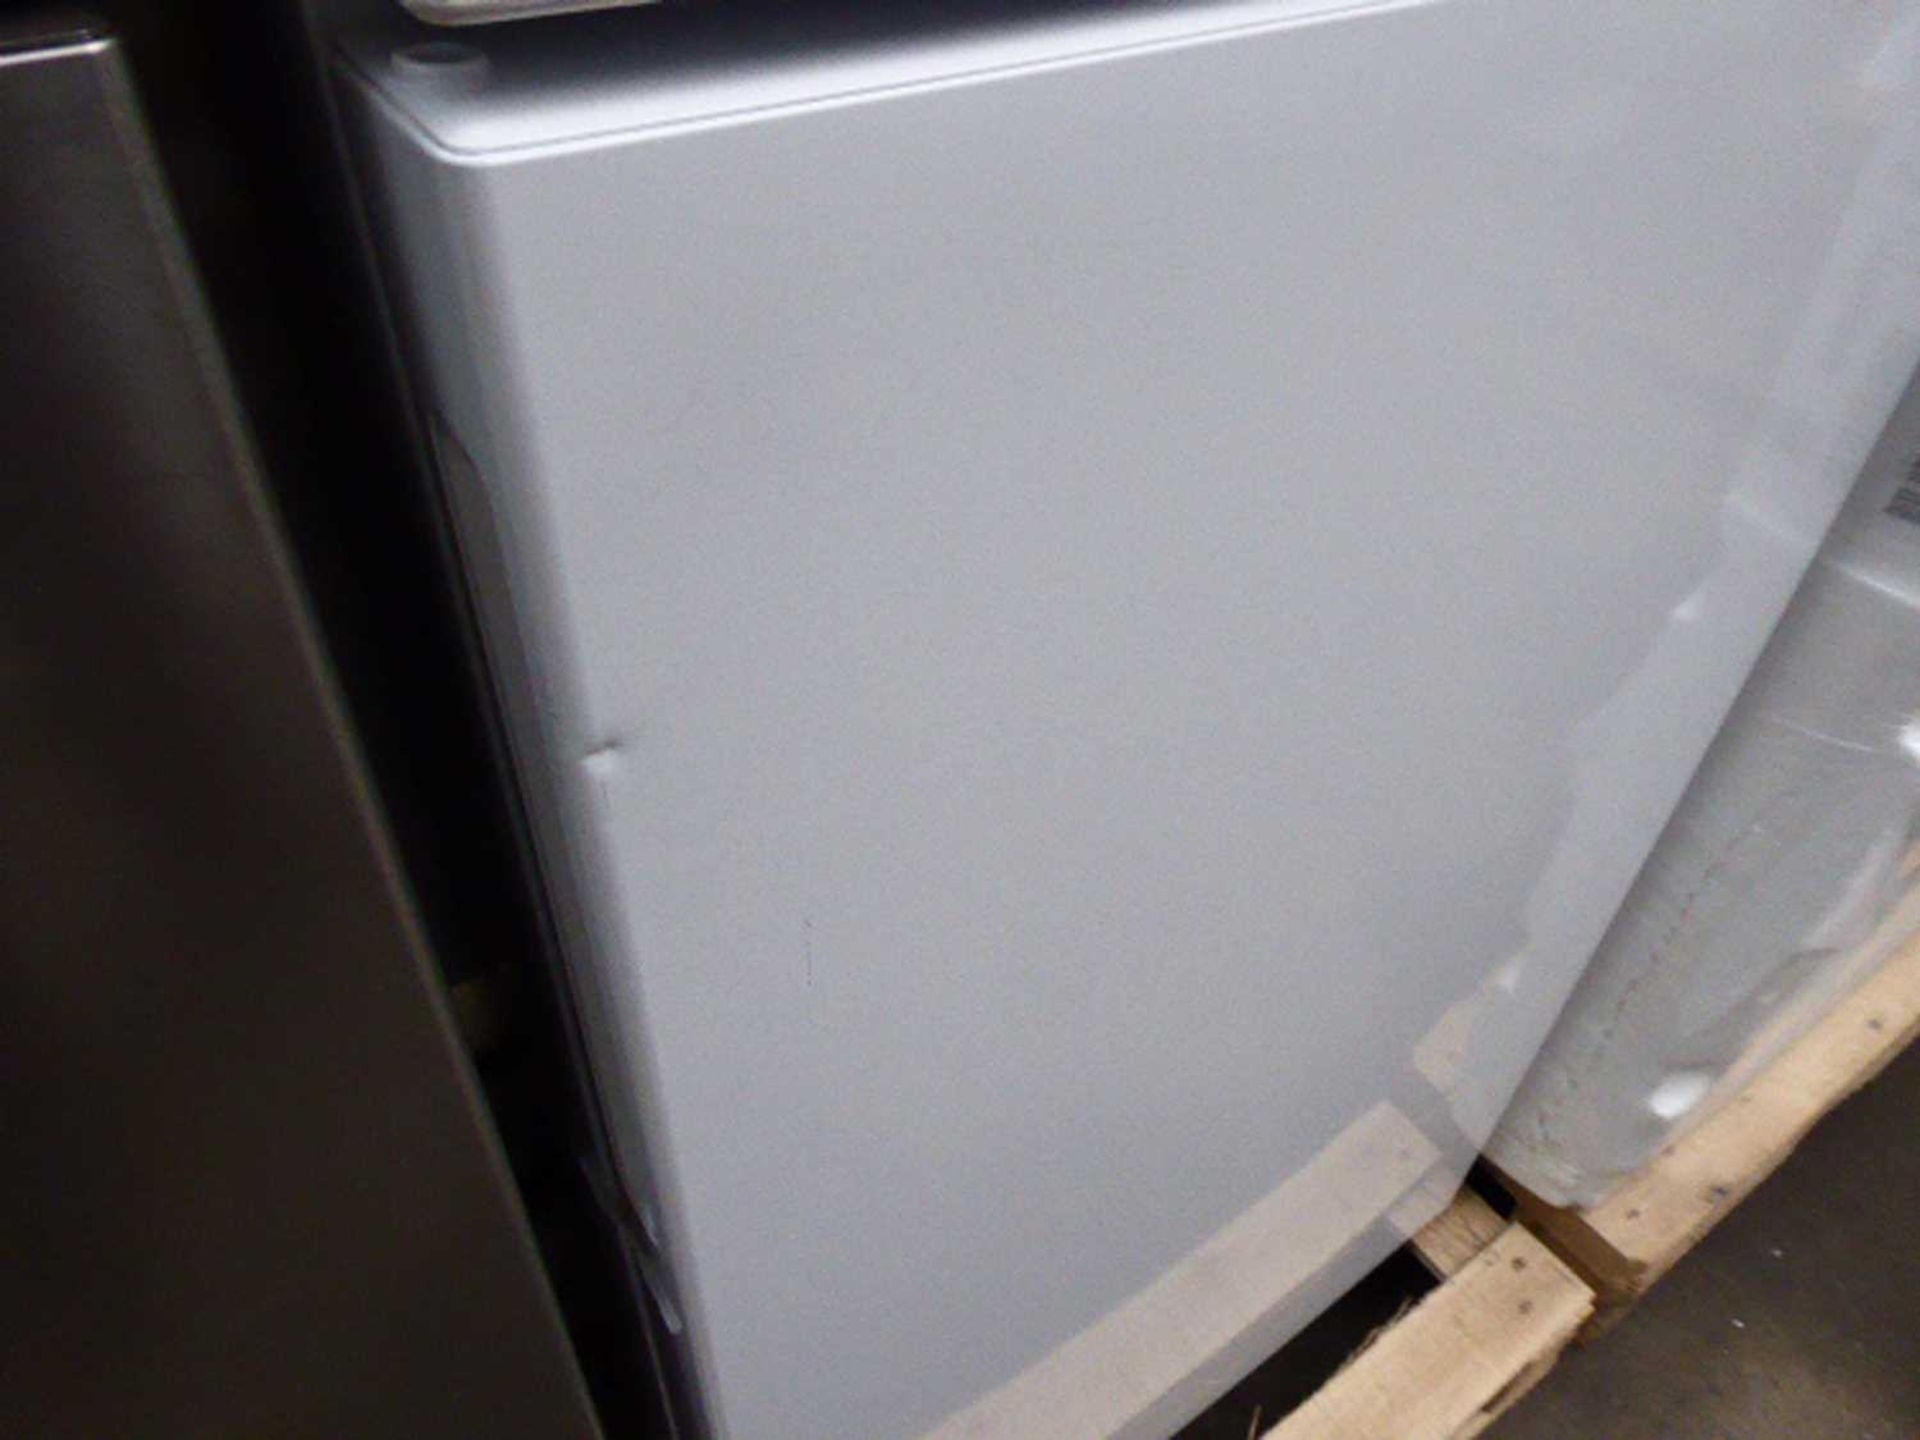 +VAT KGN27NWFAGB - Bosch - Free-standing fridge-freezer - Image 2 of 3